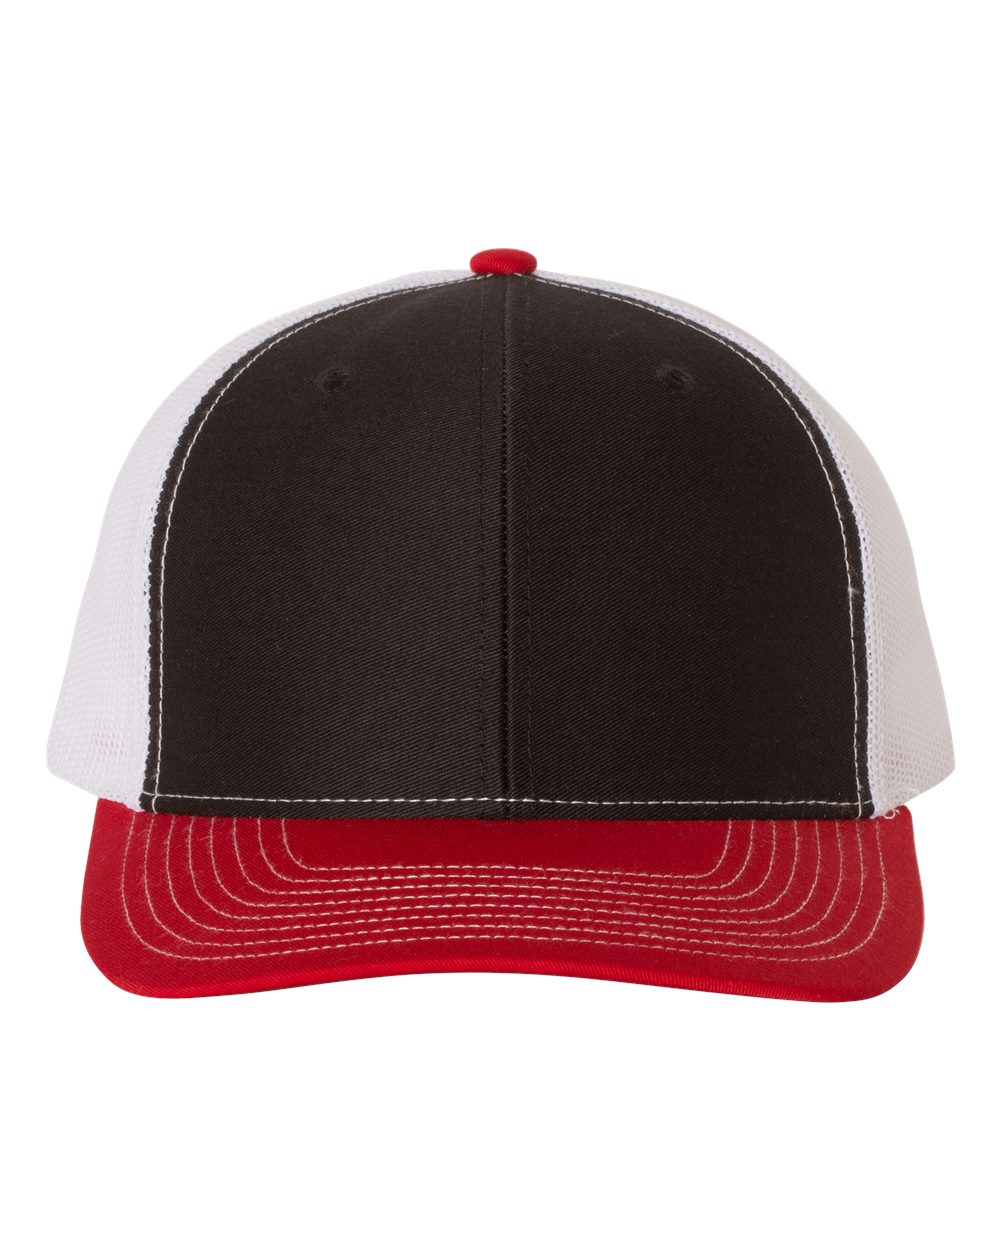 Arkansas Mile Hat